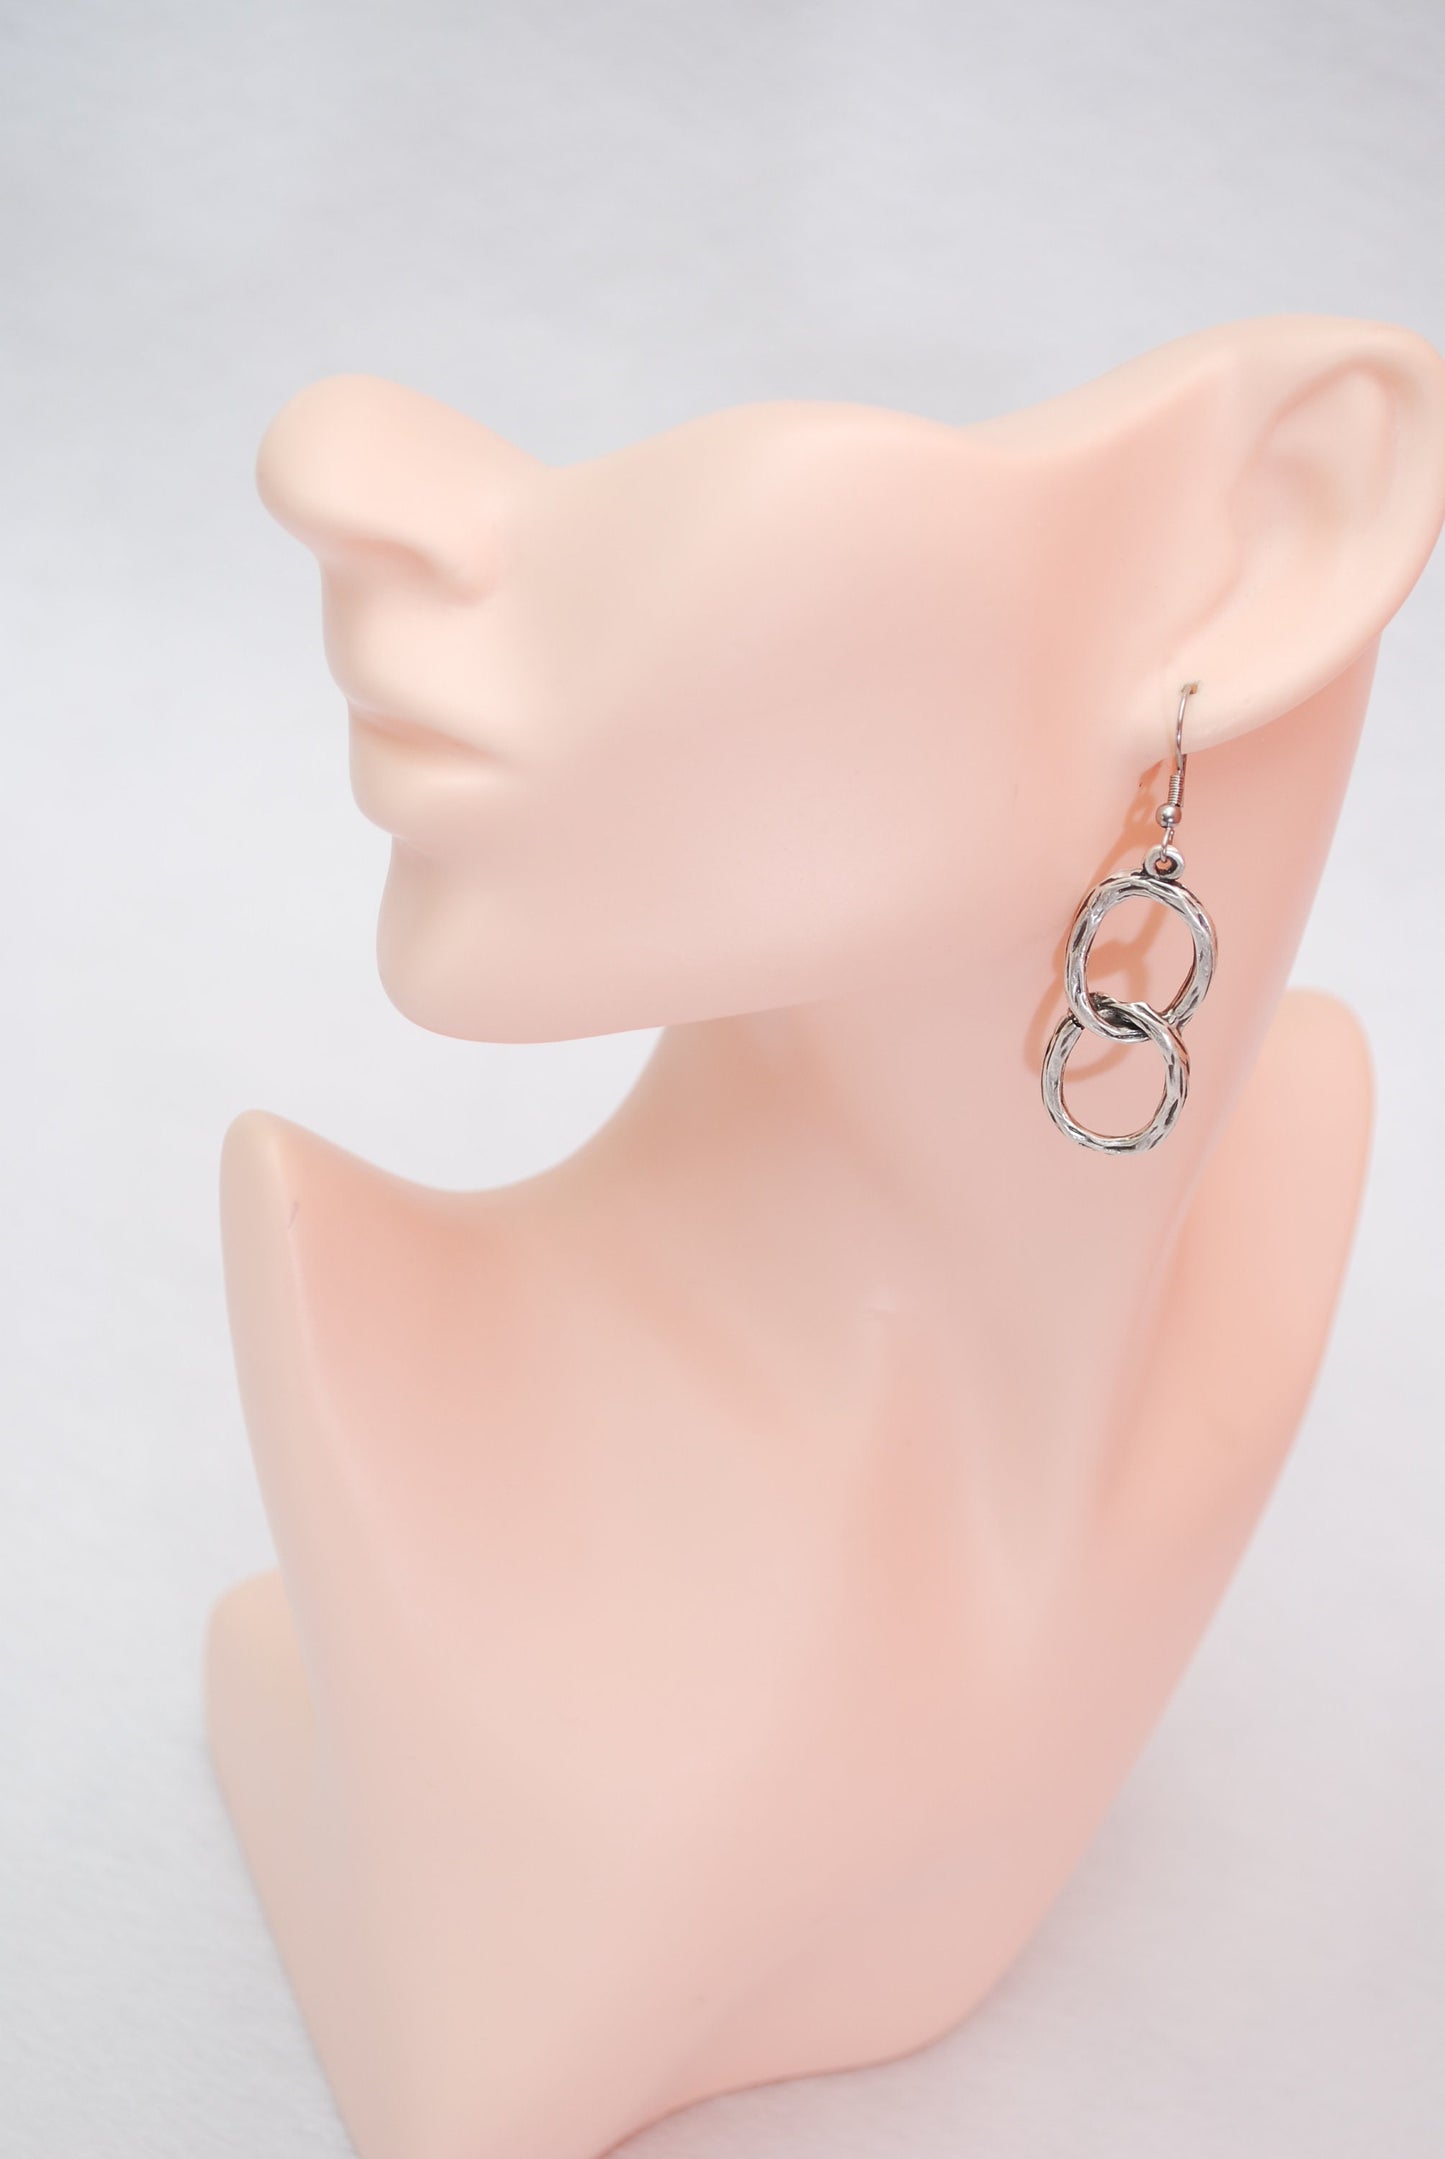 Big chain earrings, trendy drop earrings, silver plated earrings, casual outfit, girlfriend gift, 2" - 5.5cm